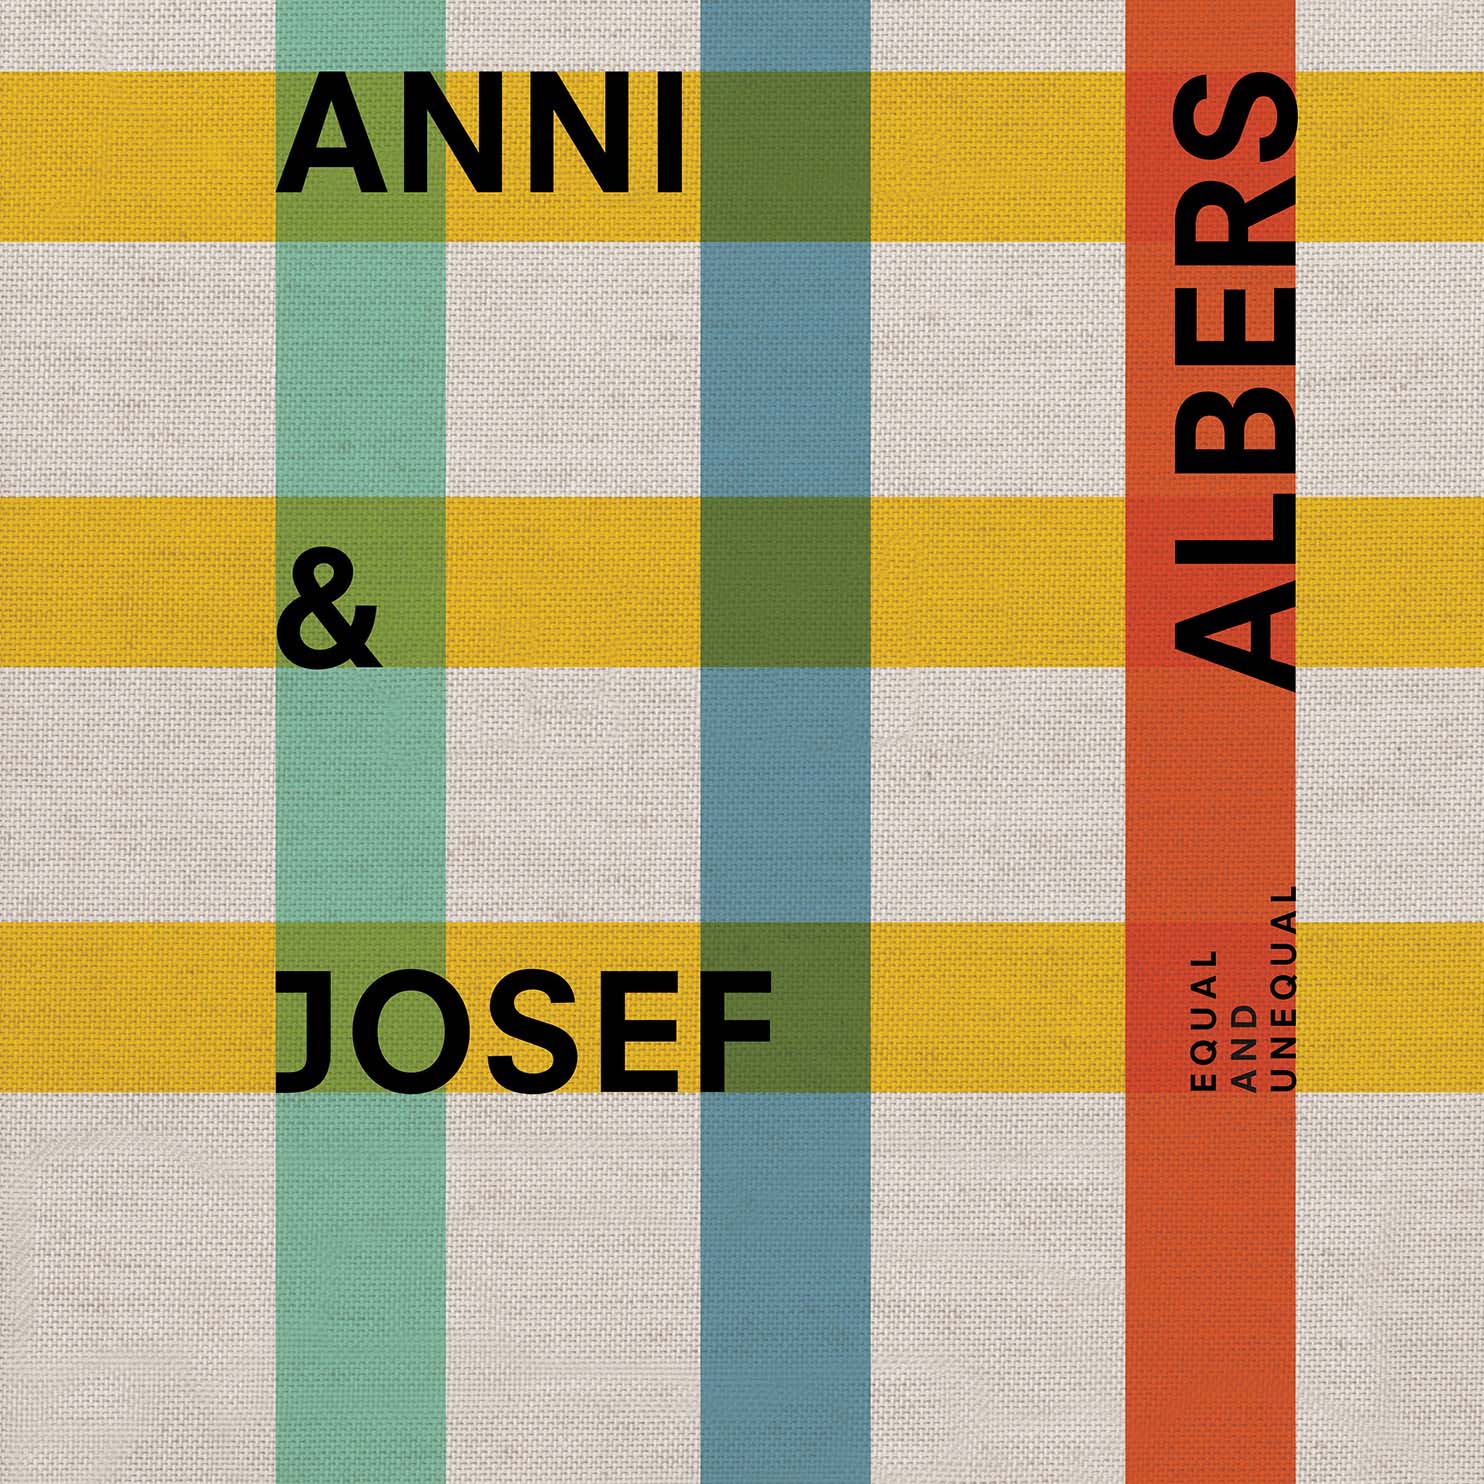 Anni & Josef Albers  की तस्वीर